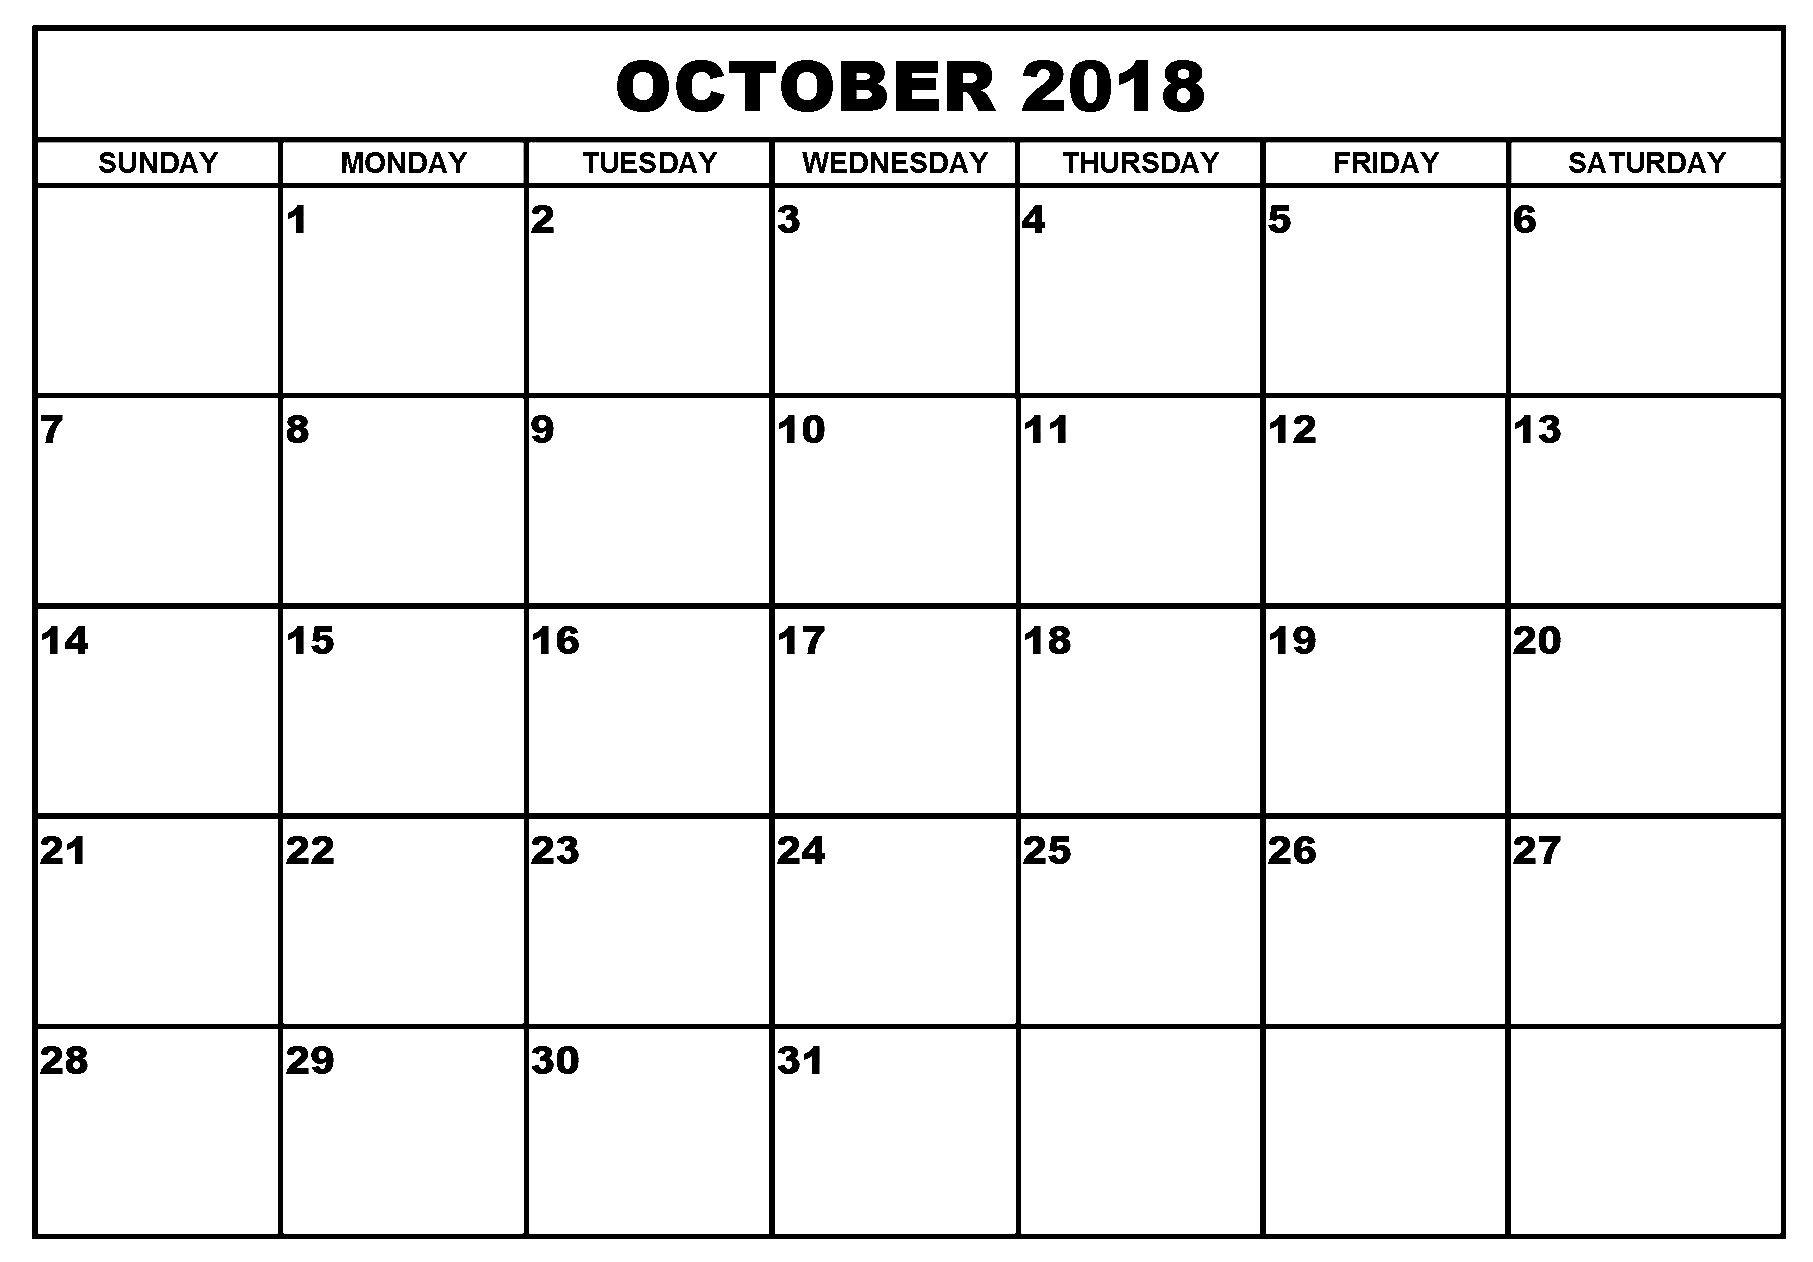 October 2018 Calendar Wallpaper PRINTABLE WITH HOLIDAYS